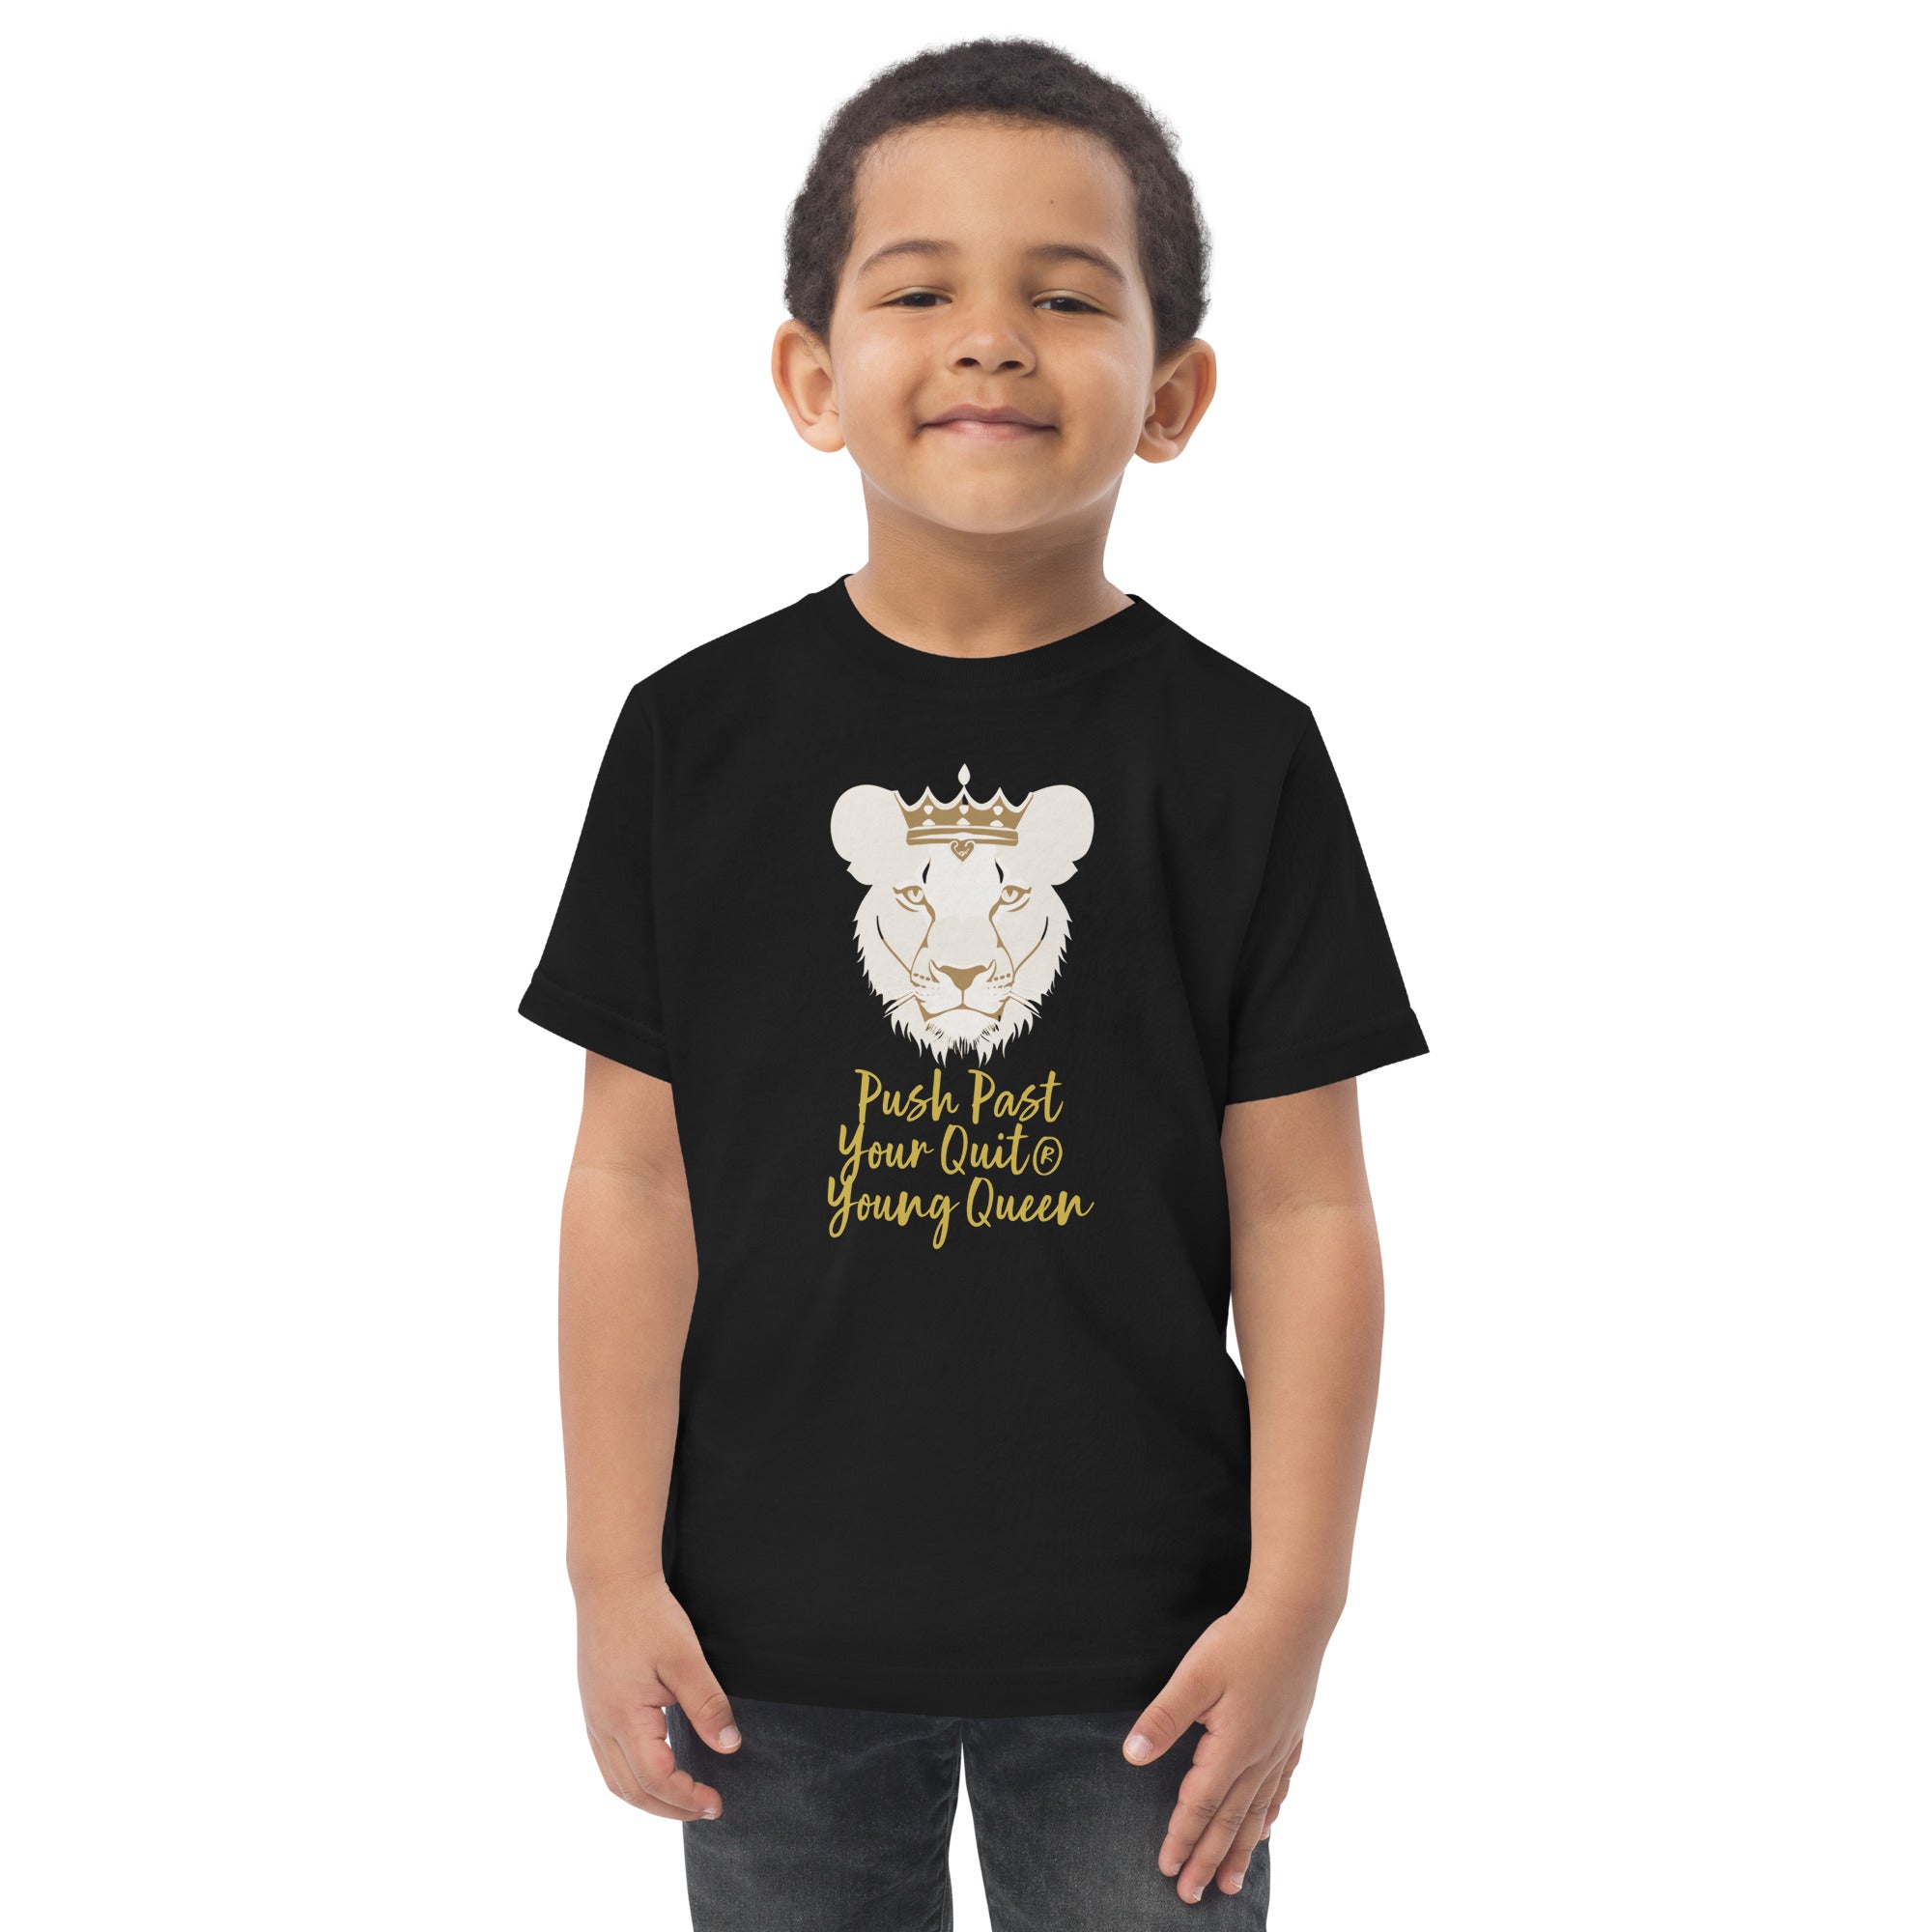 Young Queen Toddler jersey t-shirt